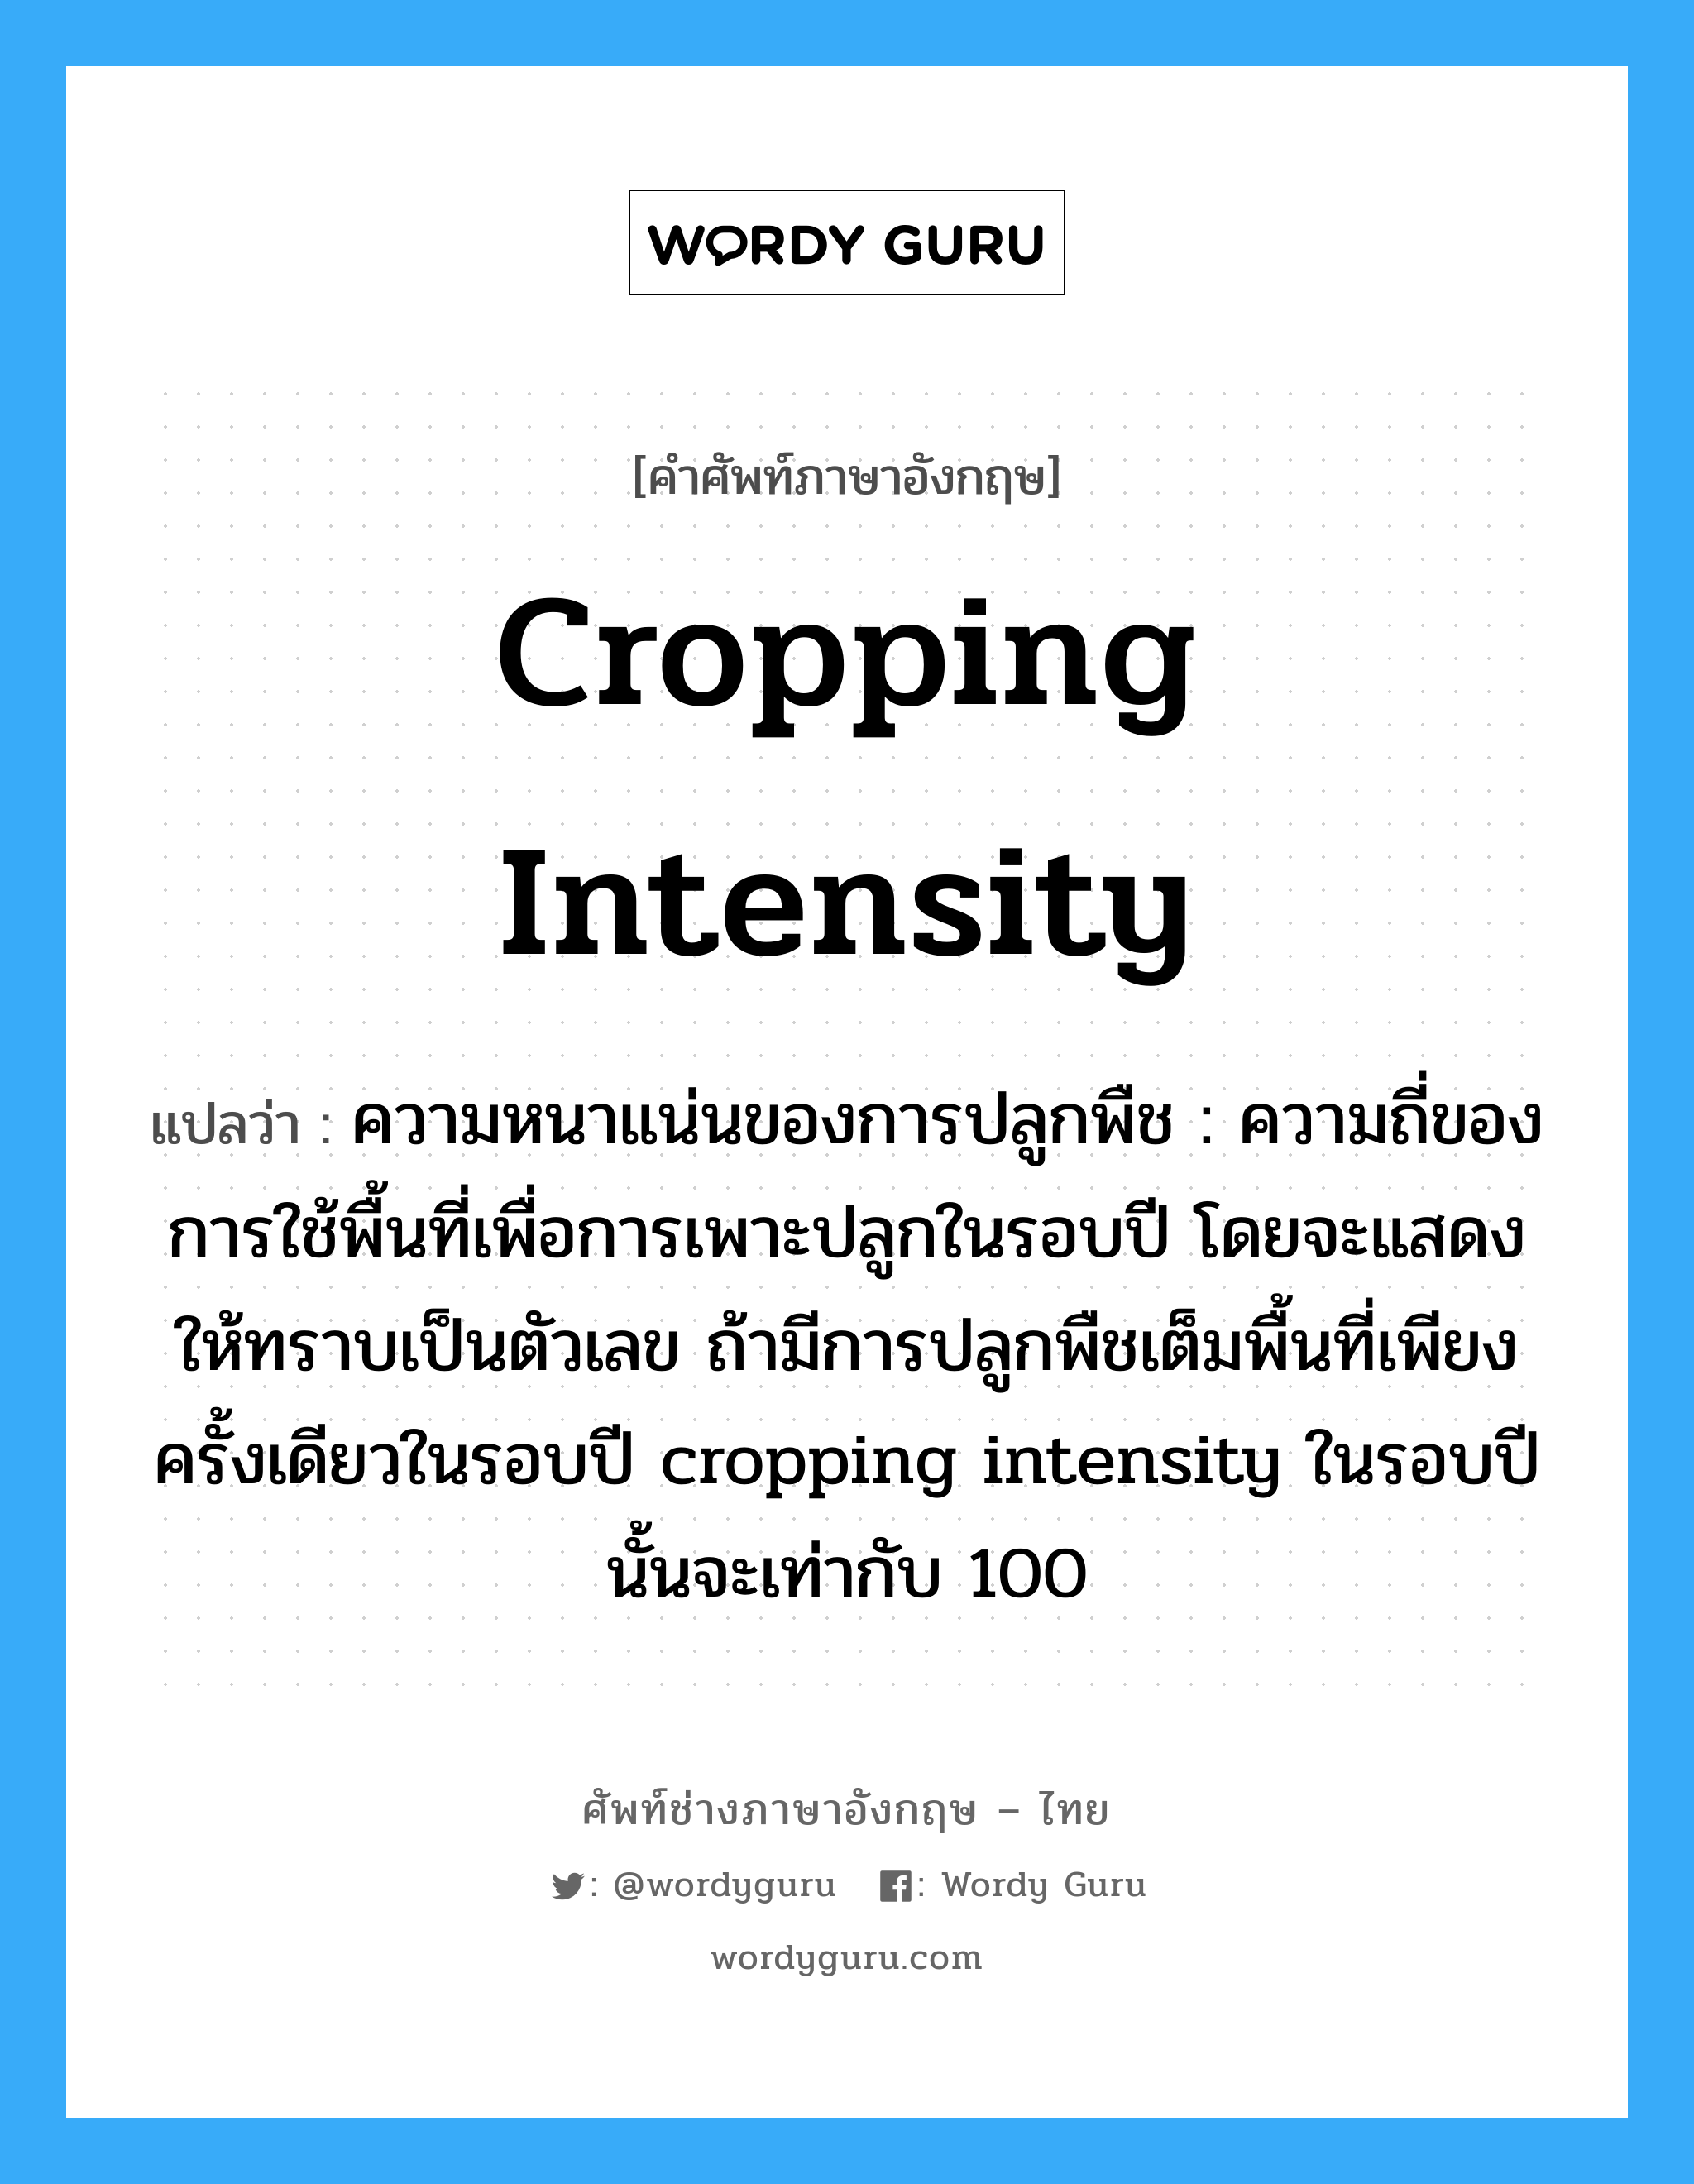 cropping intensity แปลว่า?, คำศัพท์ช่างภาษาอังกฤษ - ไทย cropping intensity คำศัพท์ภาษาอังกฤษ cropping intensity แปลว่า ความหนาแน่นของการปลูกพืช : ความถี่ของการใช้พื้นที่เพื่อการเพาะปลูกในรอบปี โดยจะแสดงให้ทราบเป็นตัวเลข ถ้ามีการปลูกพืชเต็มพื้นที่เพียงครั้งเดียวในรอบปี cropping intensity ในรอบปีนั้นจะเท่ากับ 100